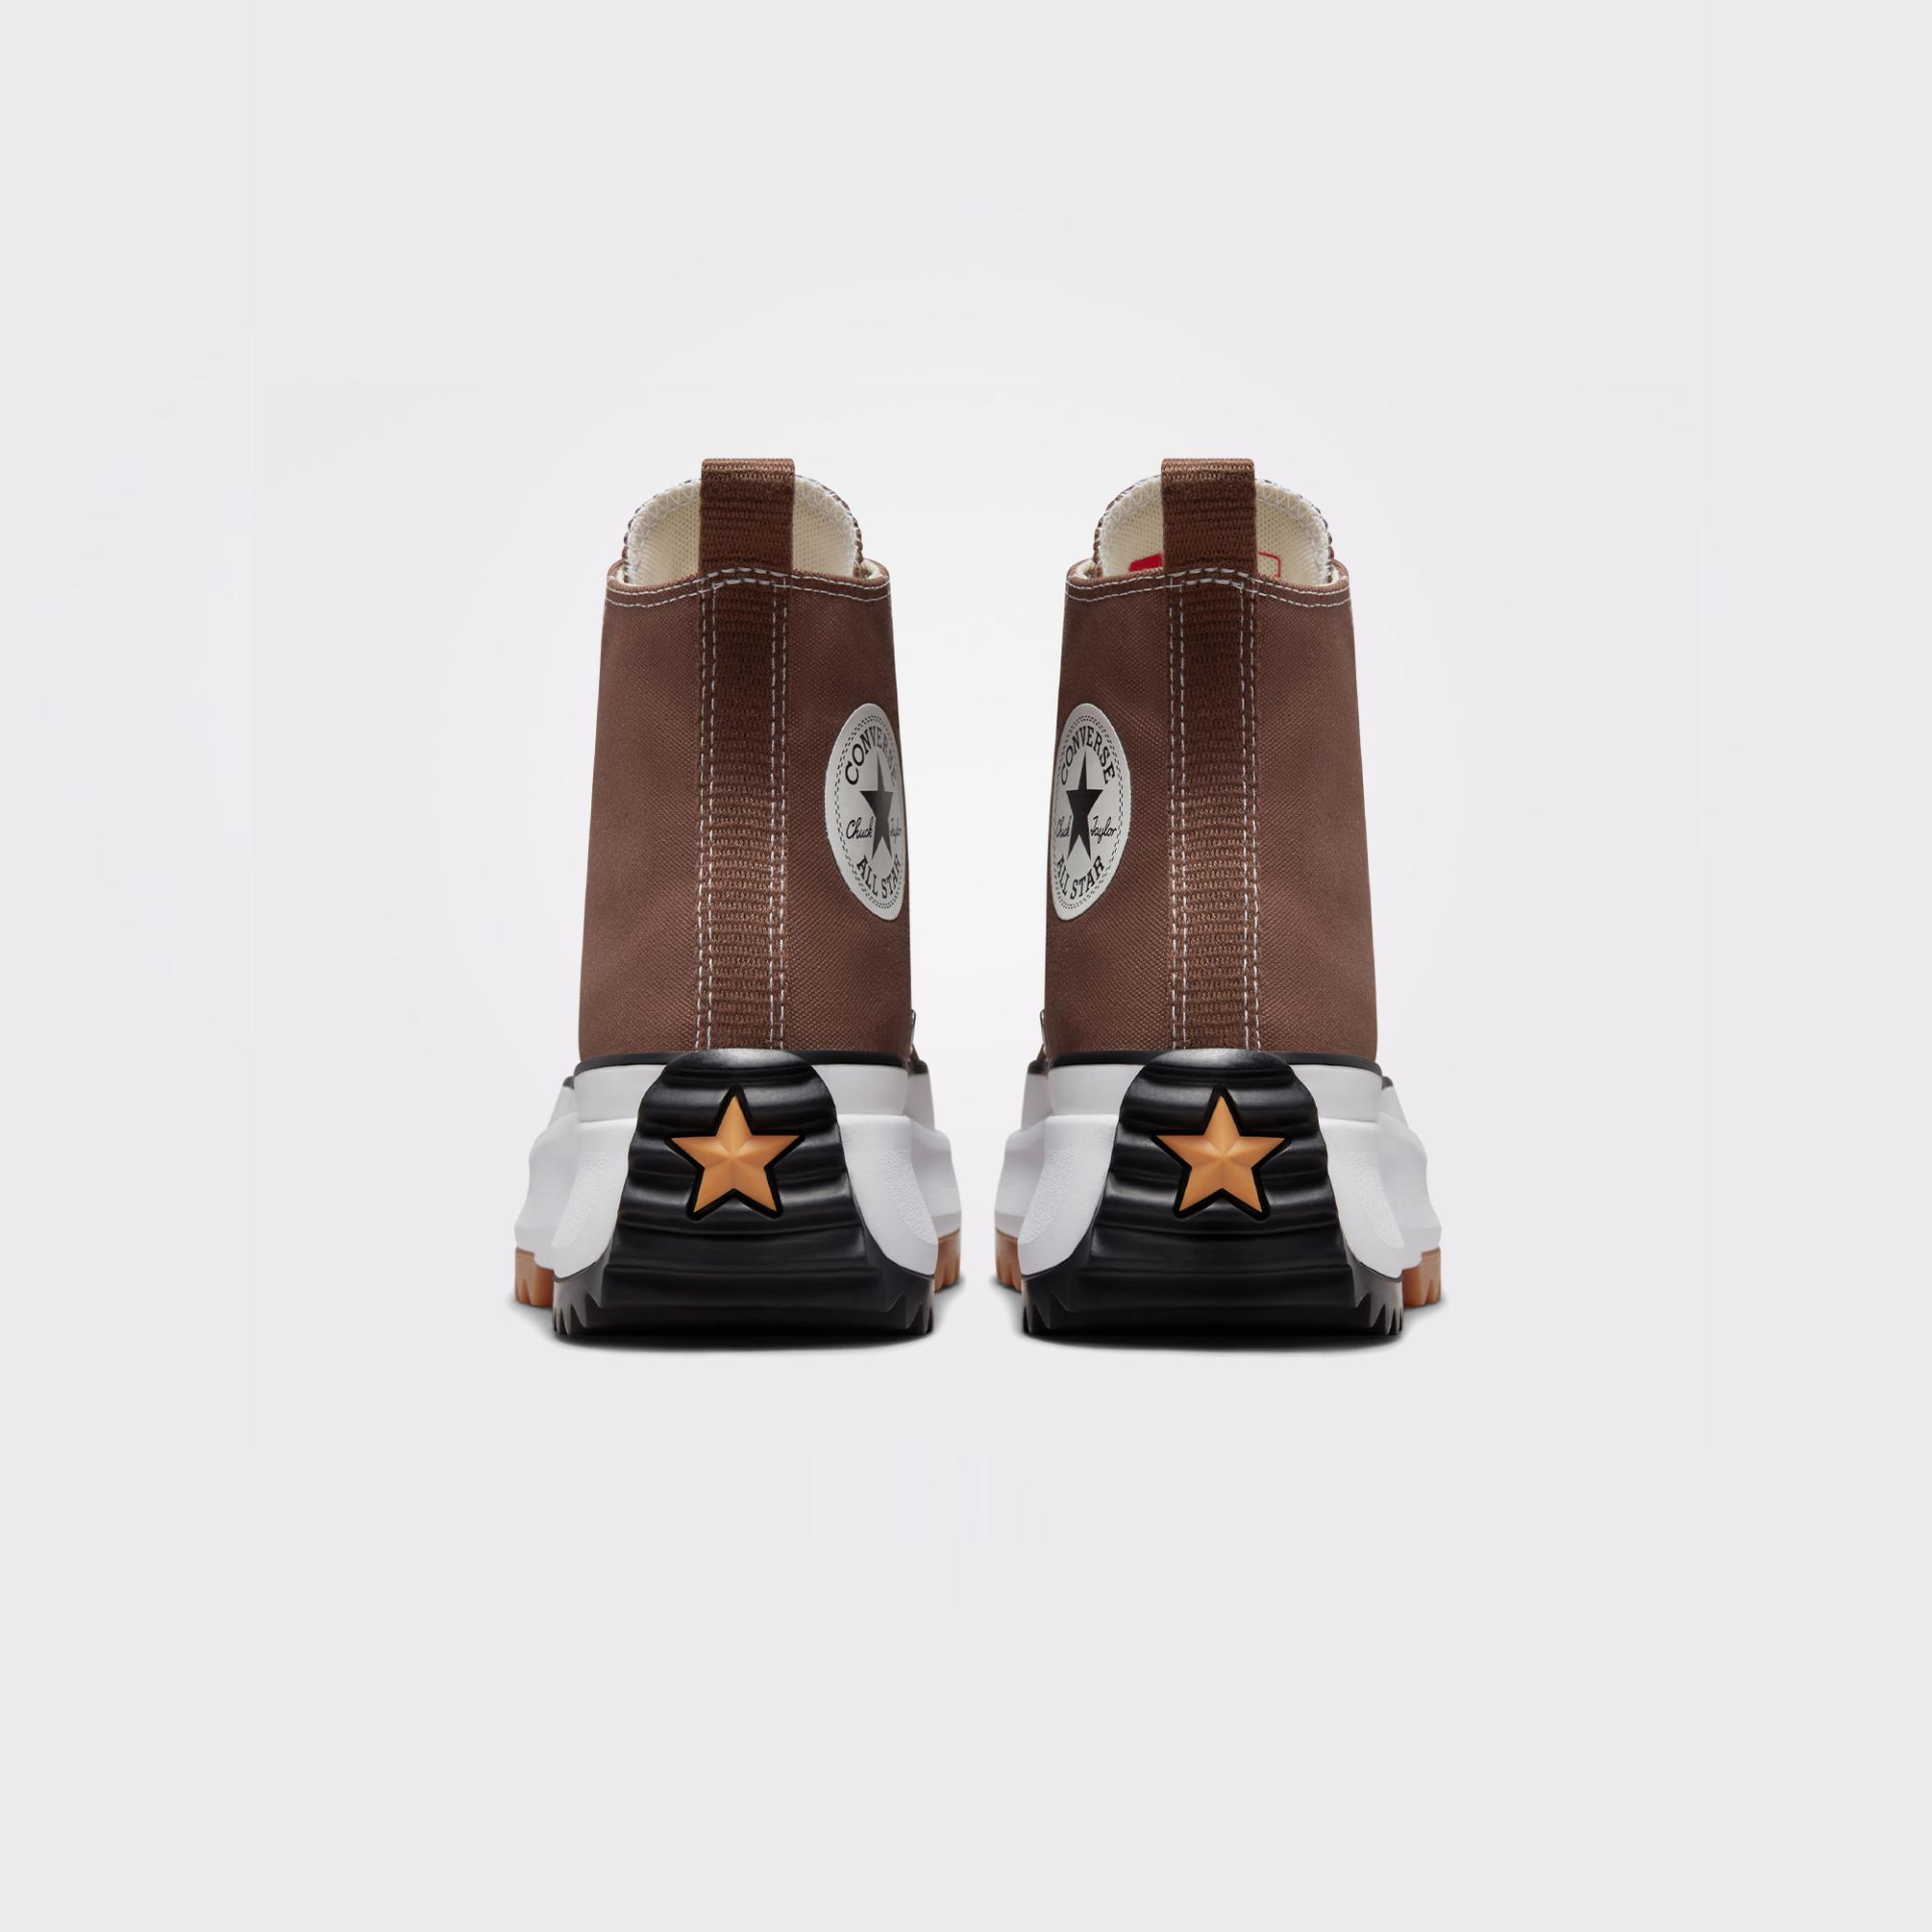  Converse Run Star Hike Platform Seasonal Color Kadın Kahverengi Sneaker